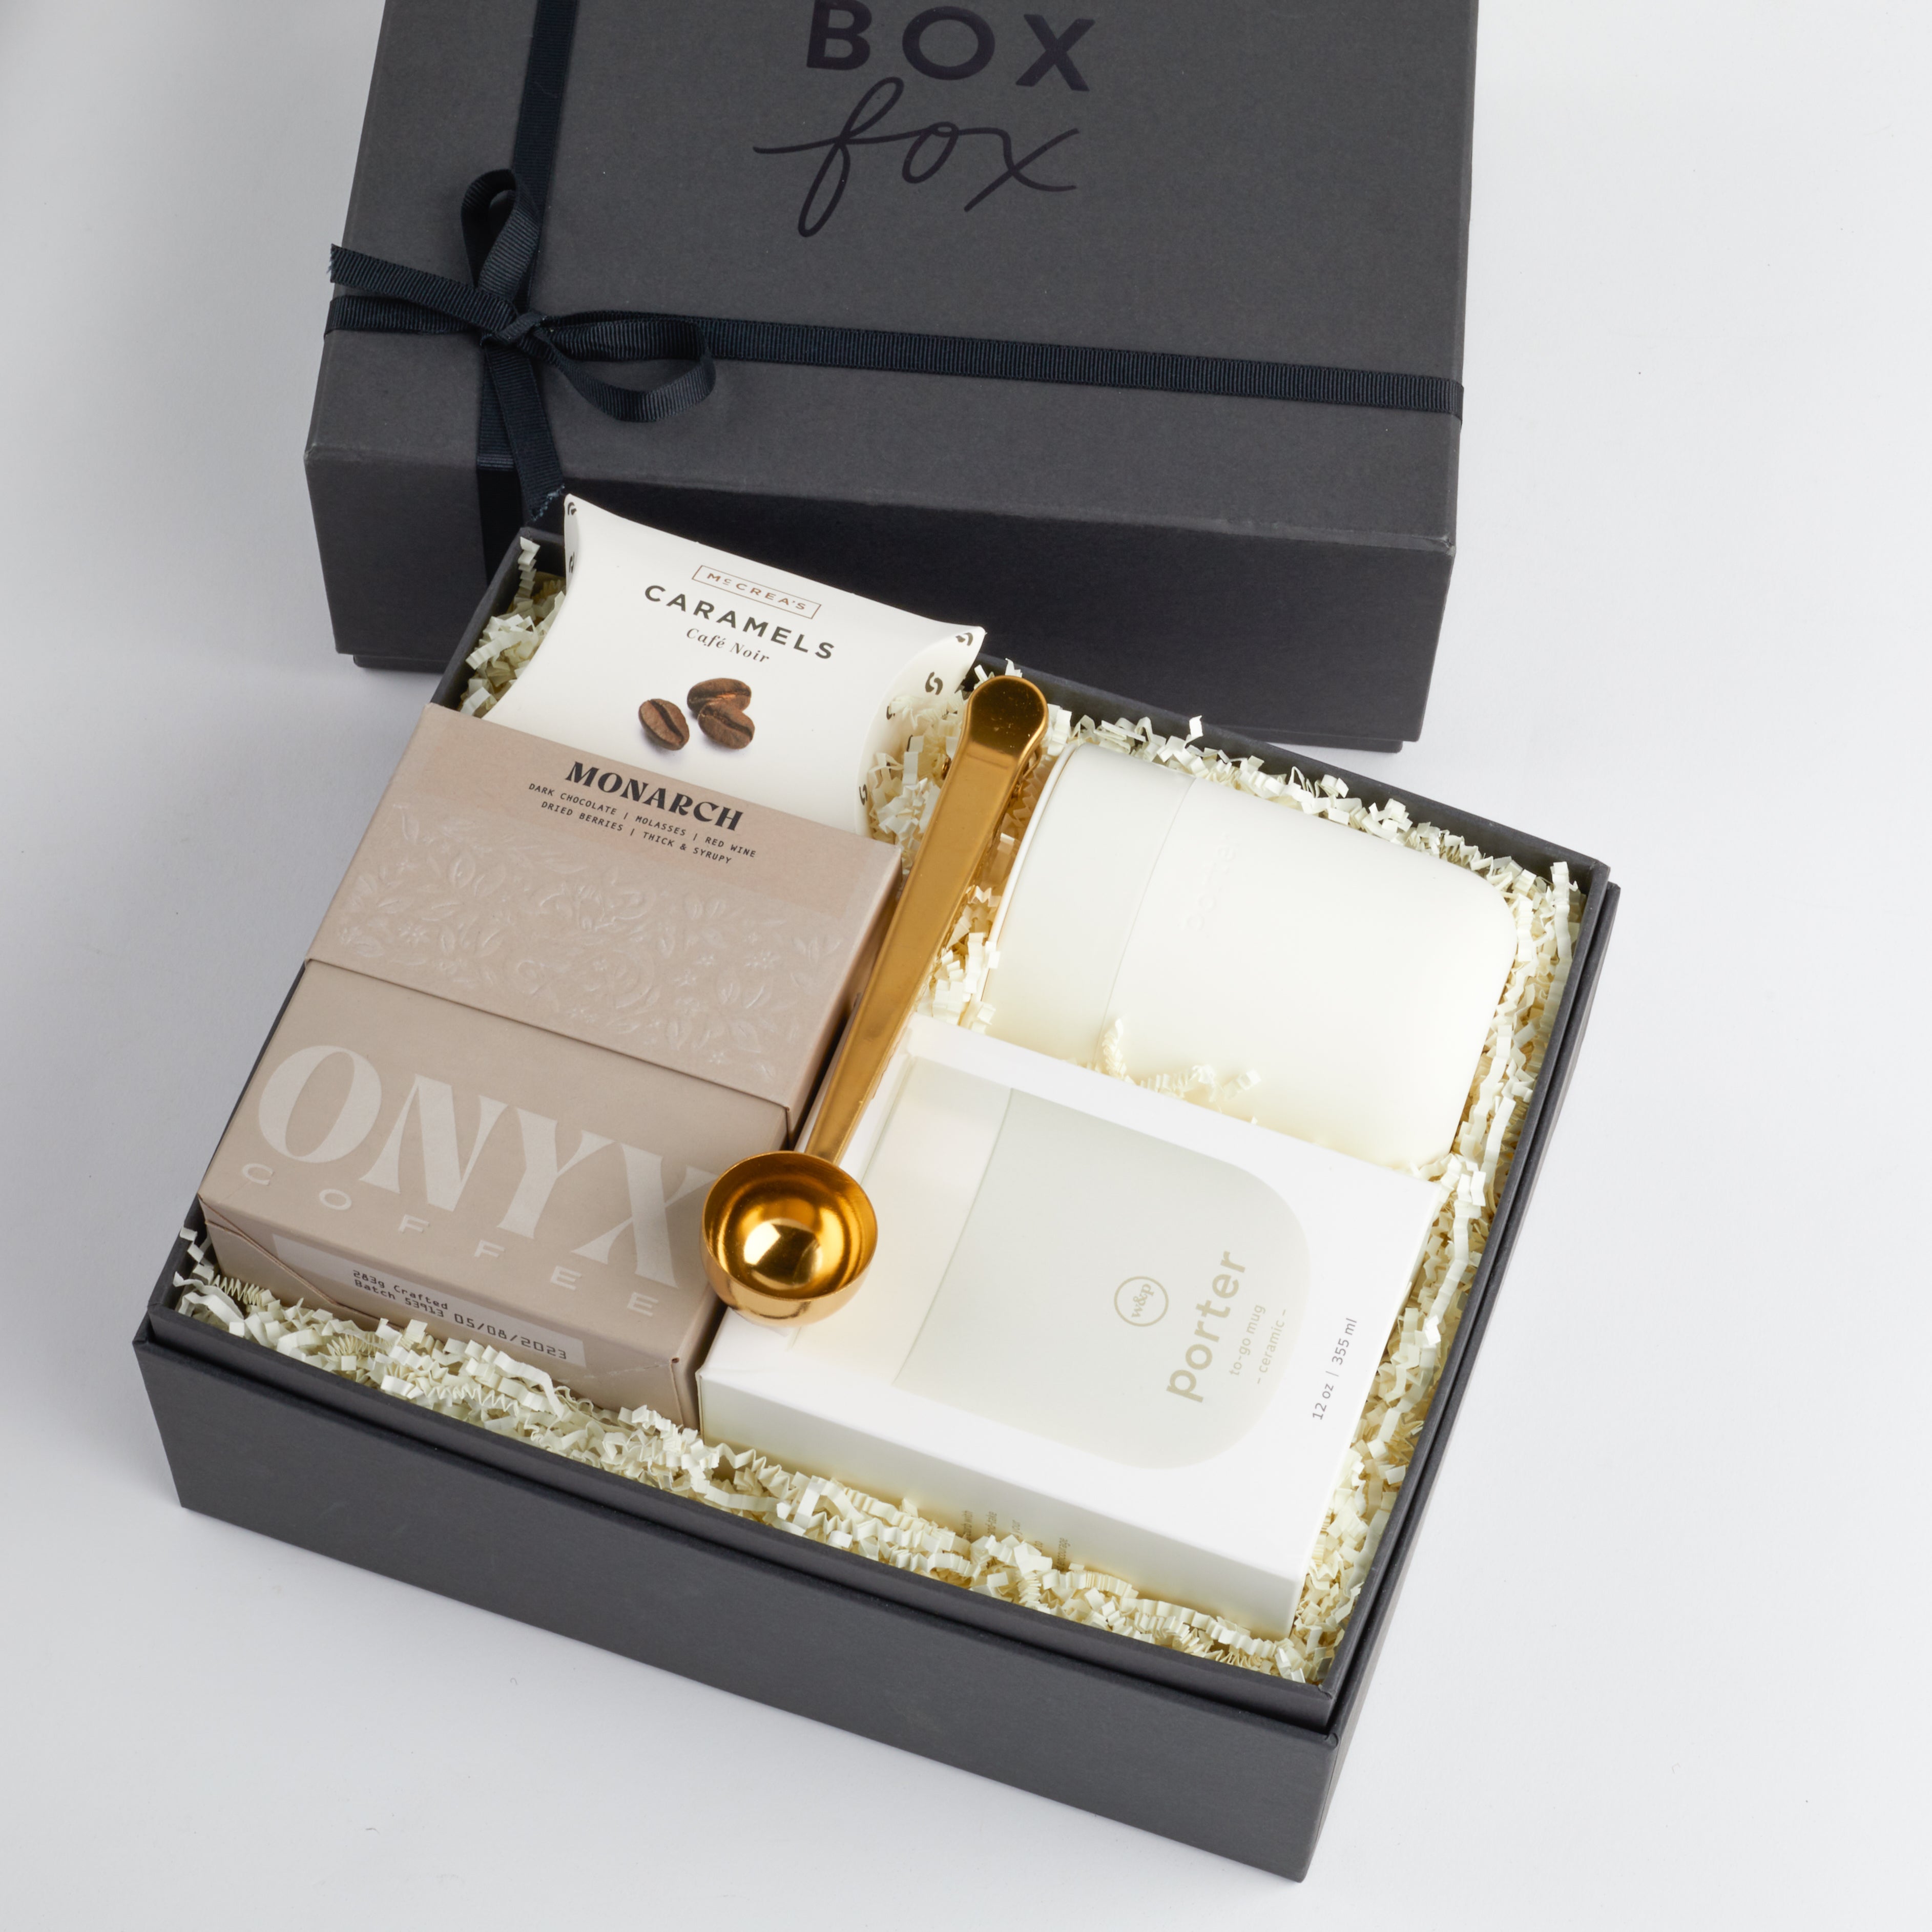 Coffee BOXFOX gift box.